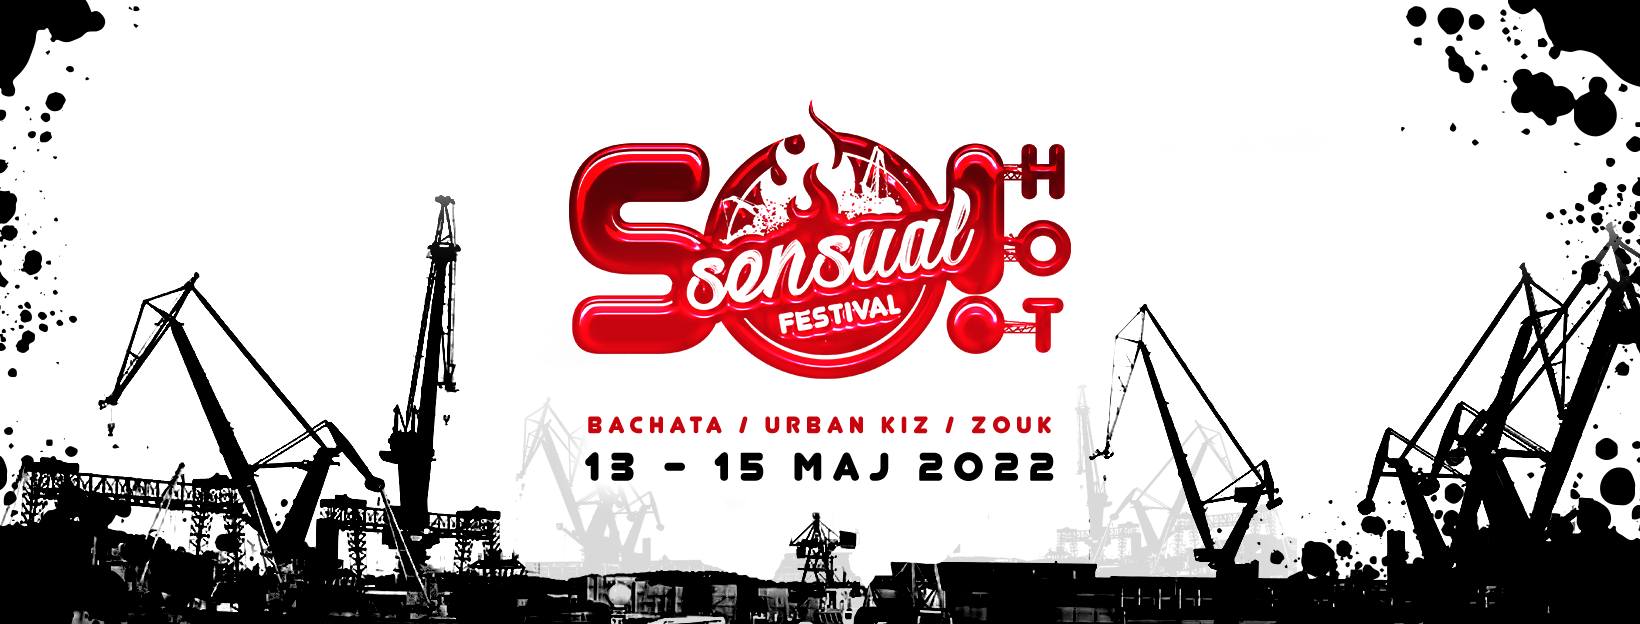 So! Hot Sensual Festival